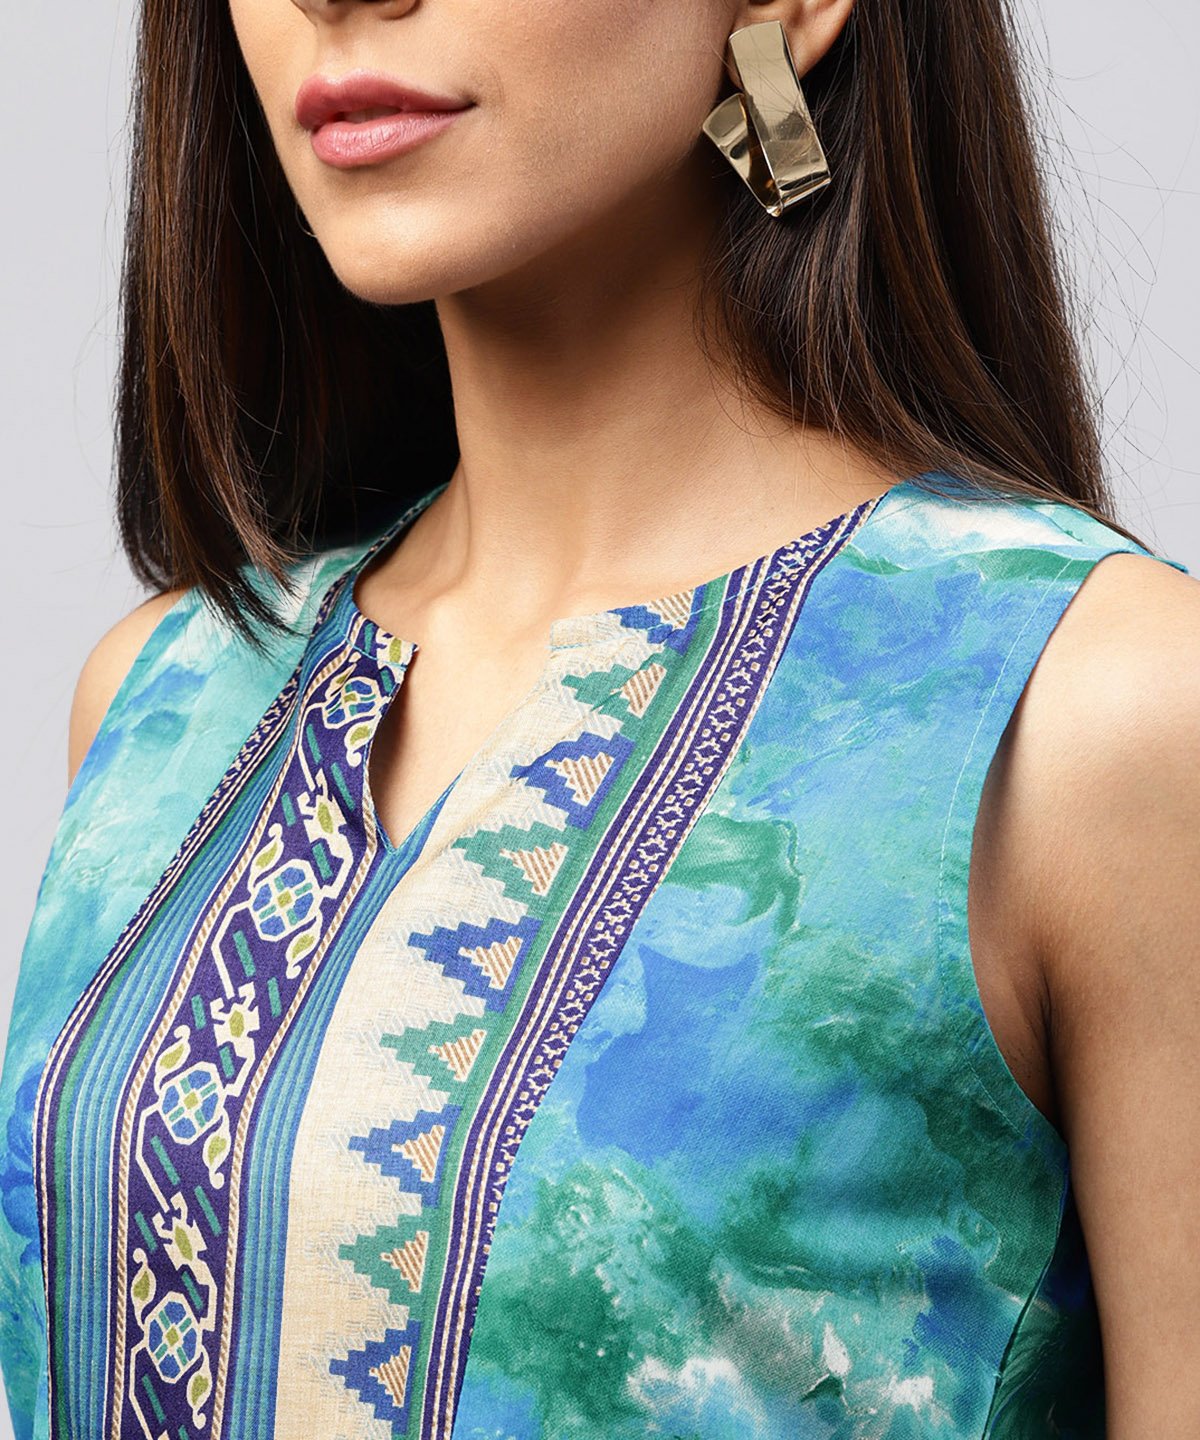 Women's Blue Banglori Printed Sleeveless Tops - Nayo Clothing